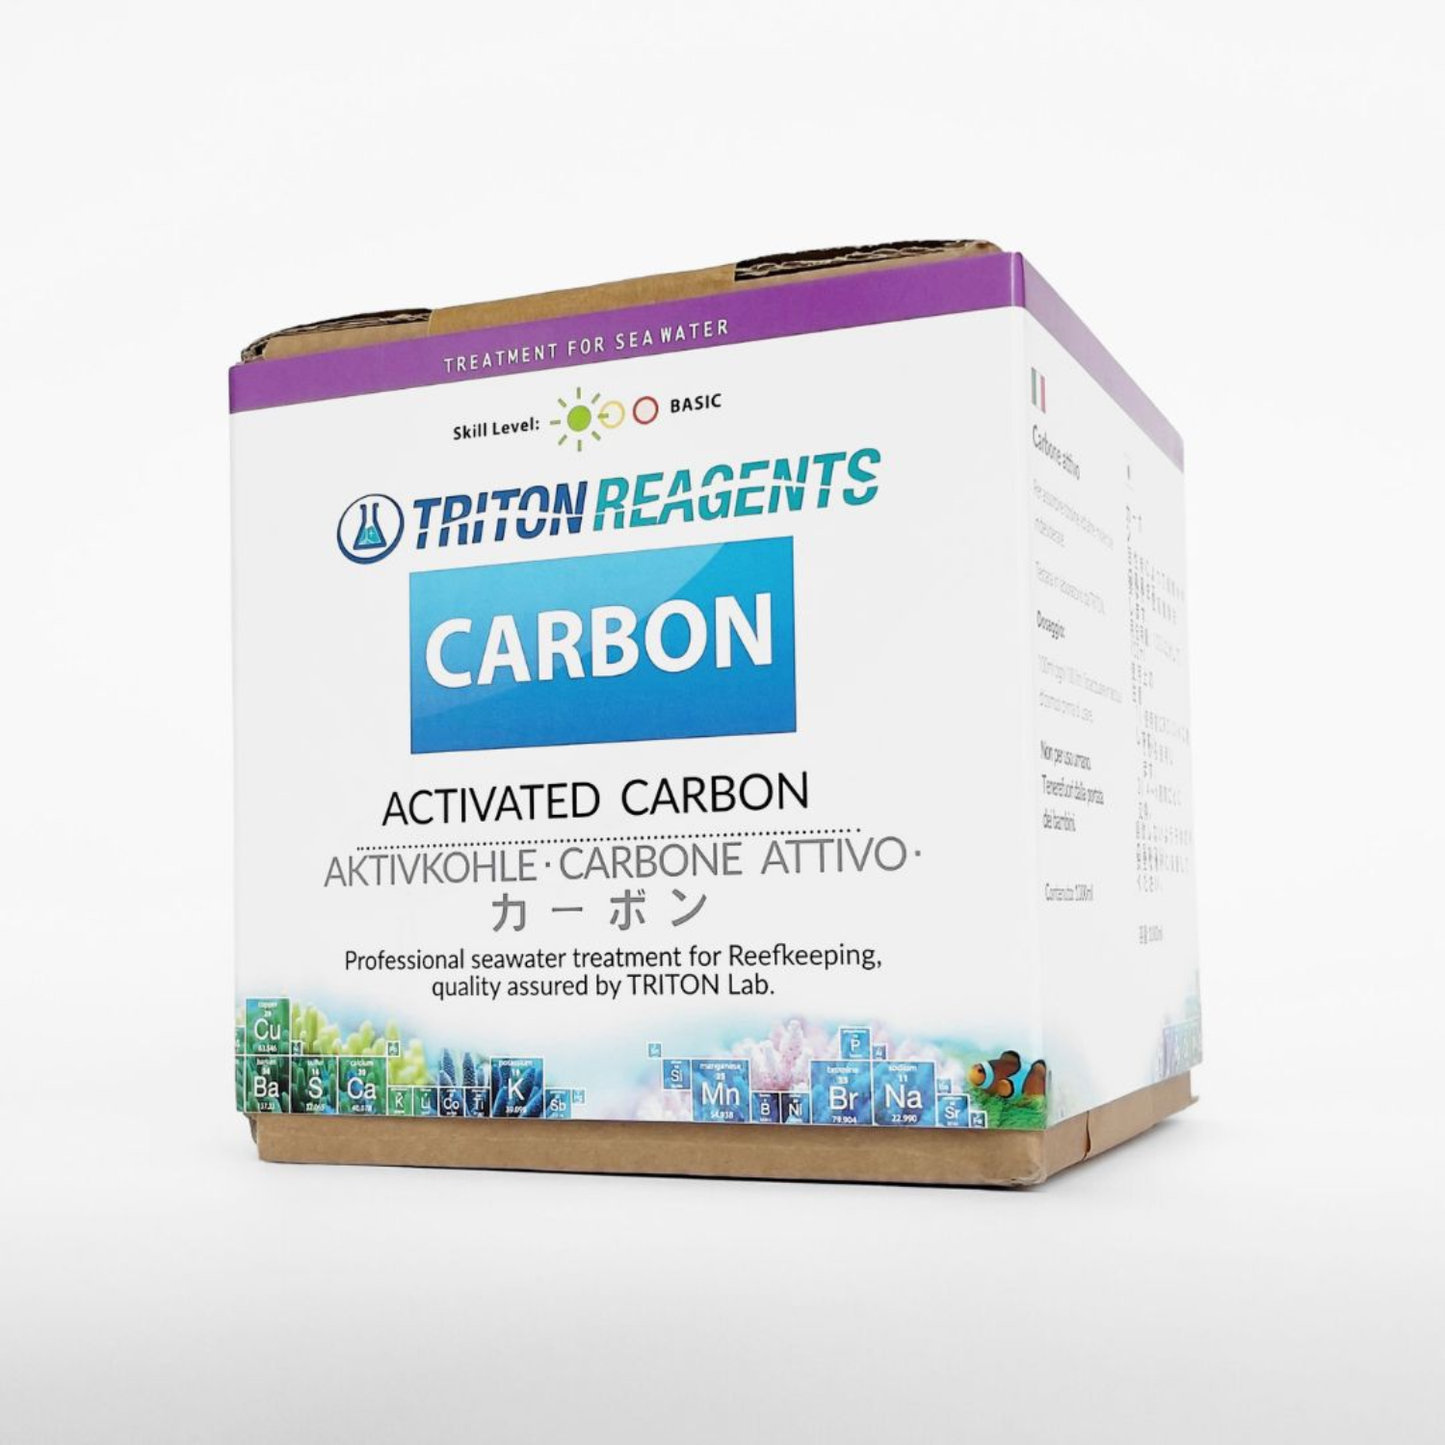 Carbon Carbone Attivo